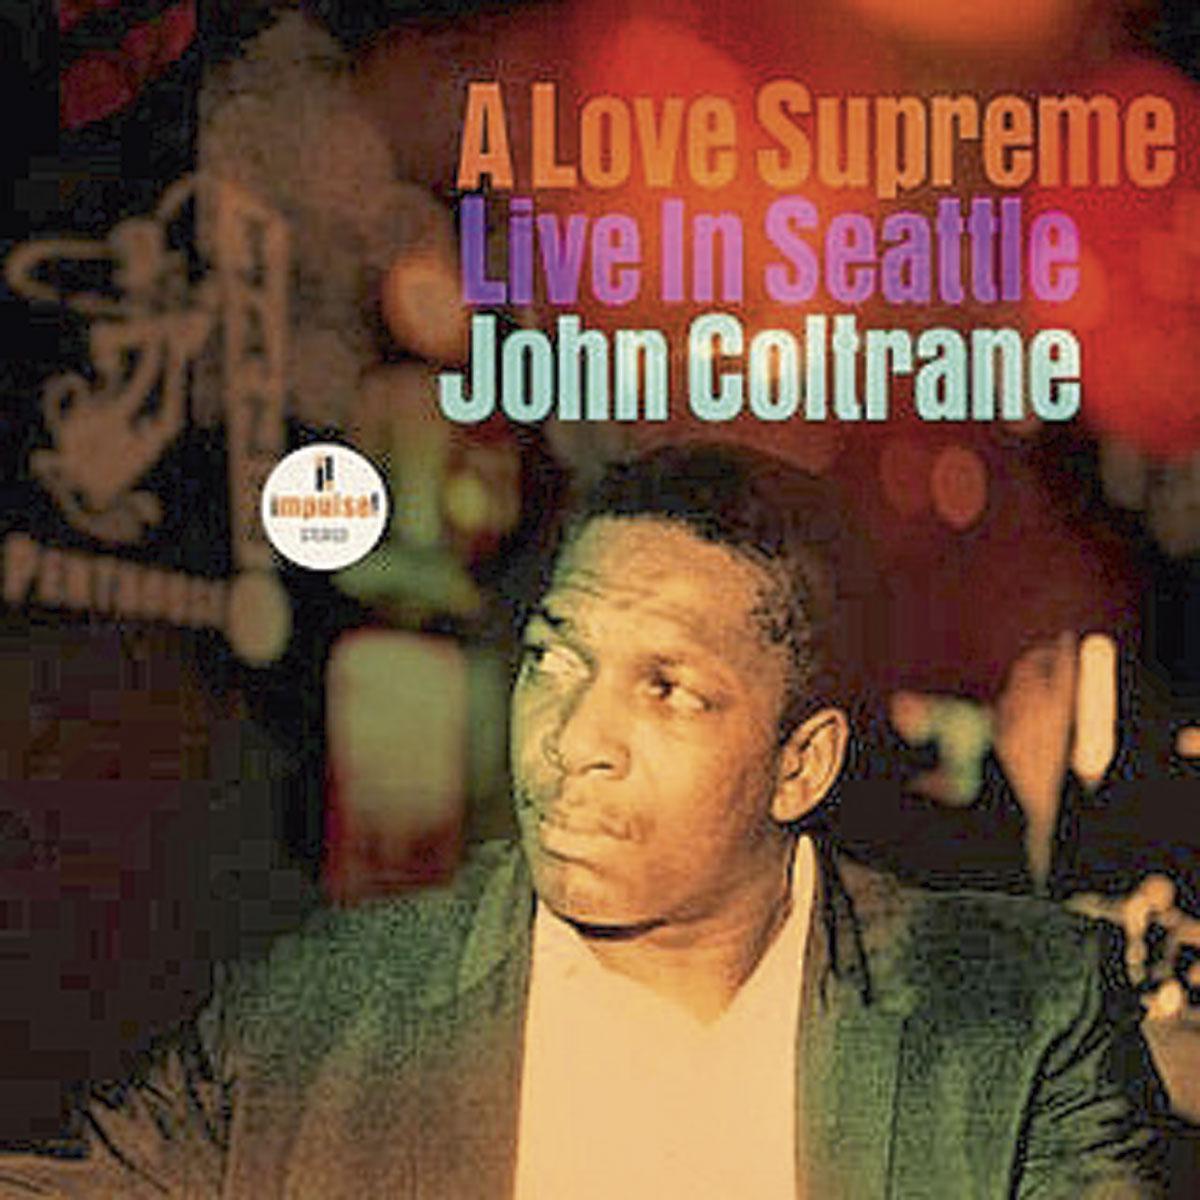 [l'album de la semaine] John Coltrane - A Love Supreme - Live in Seattle: avant la révolution